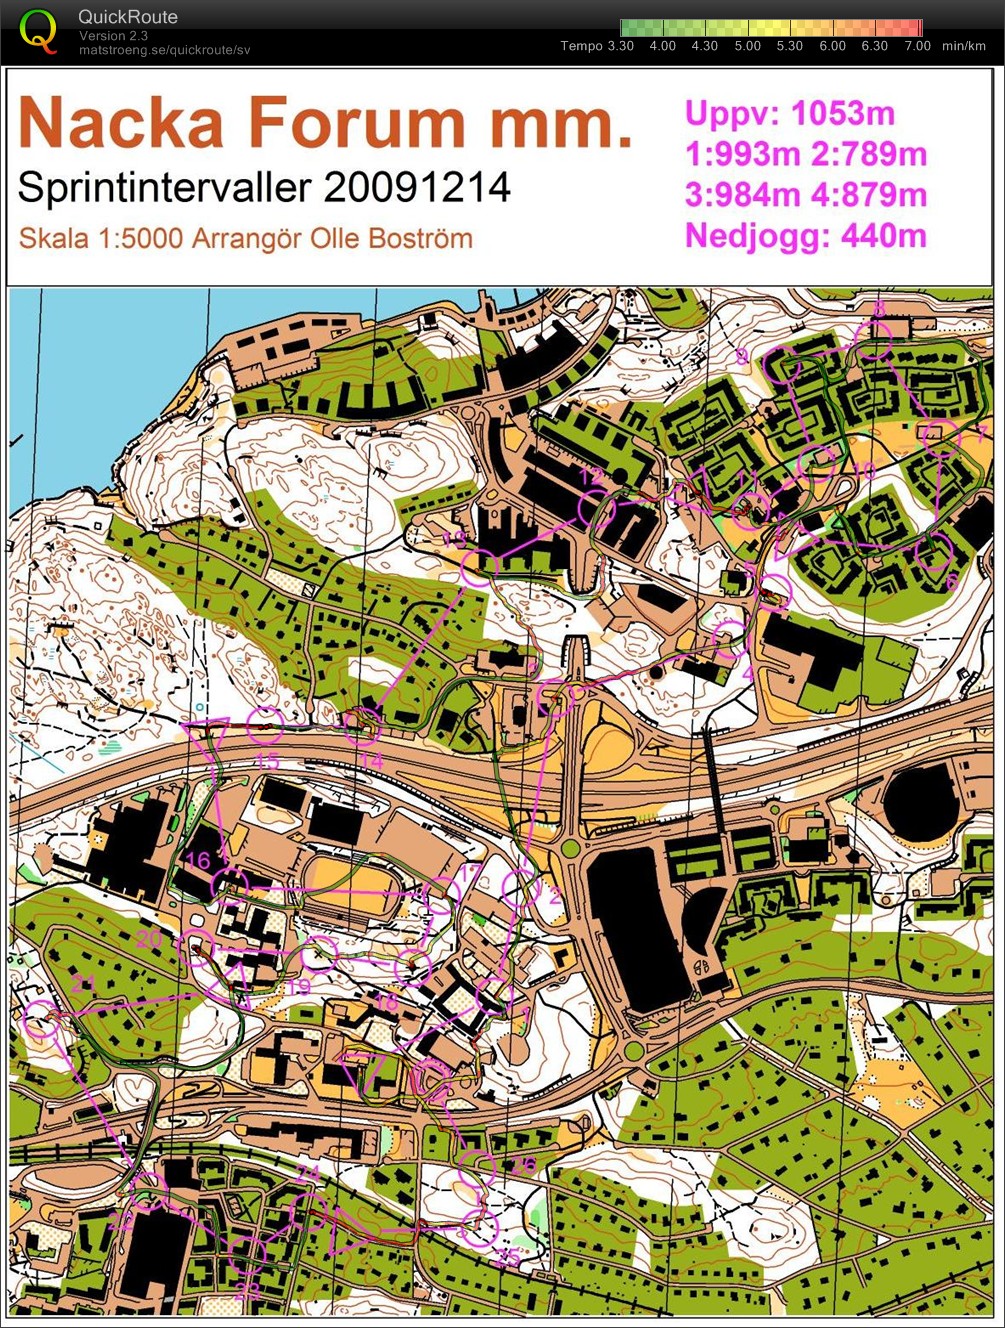 Sprintintervaller Järlahallen (14/12/2009)